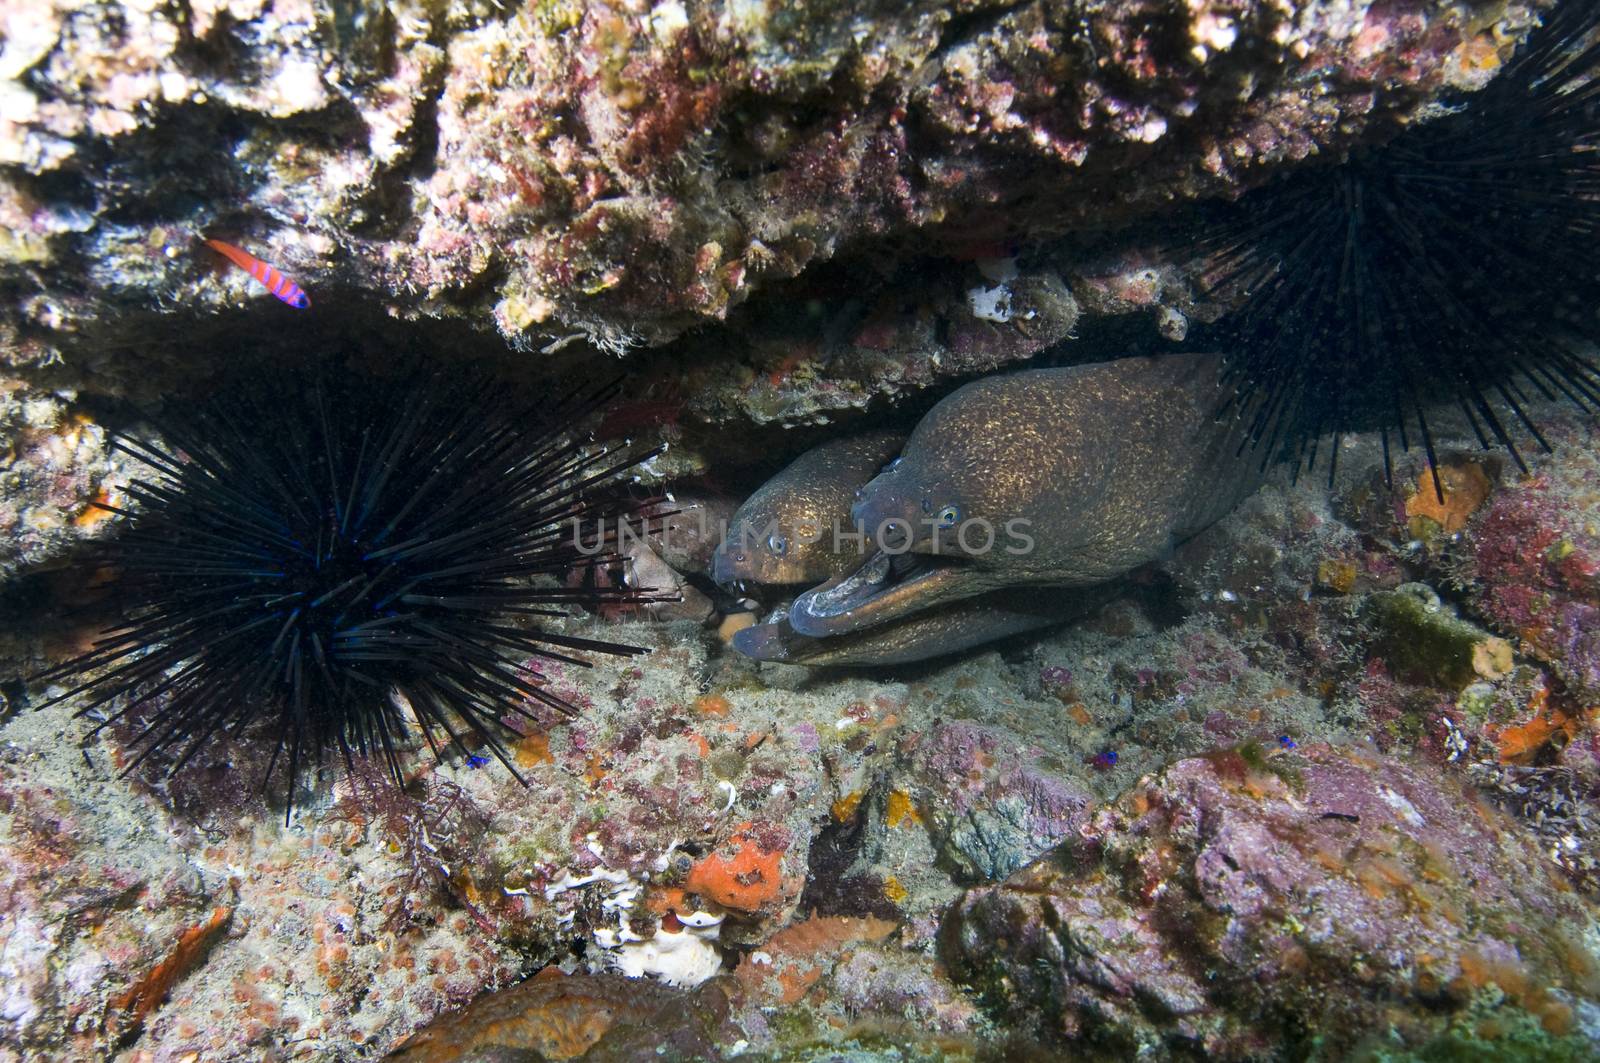 California moray eels (Gymnoyhorax mordax) by Njean